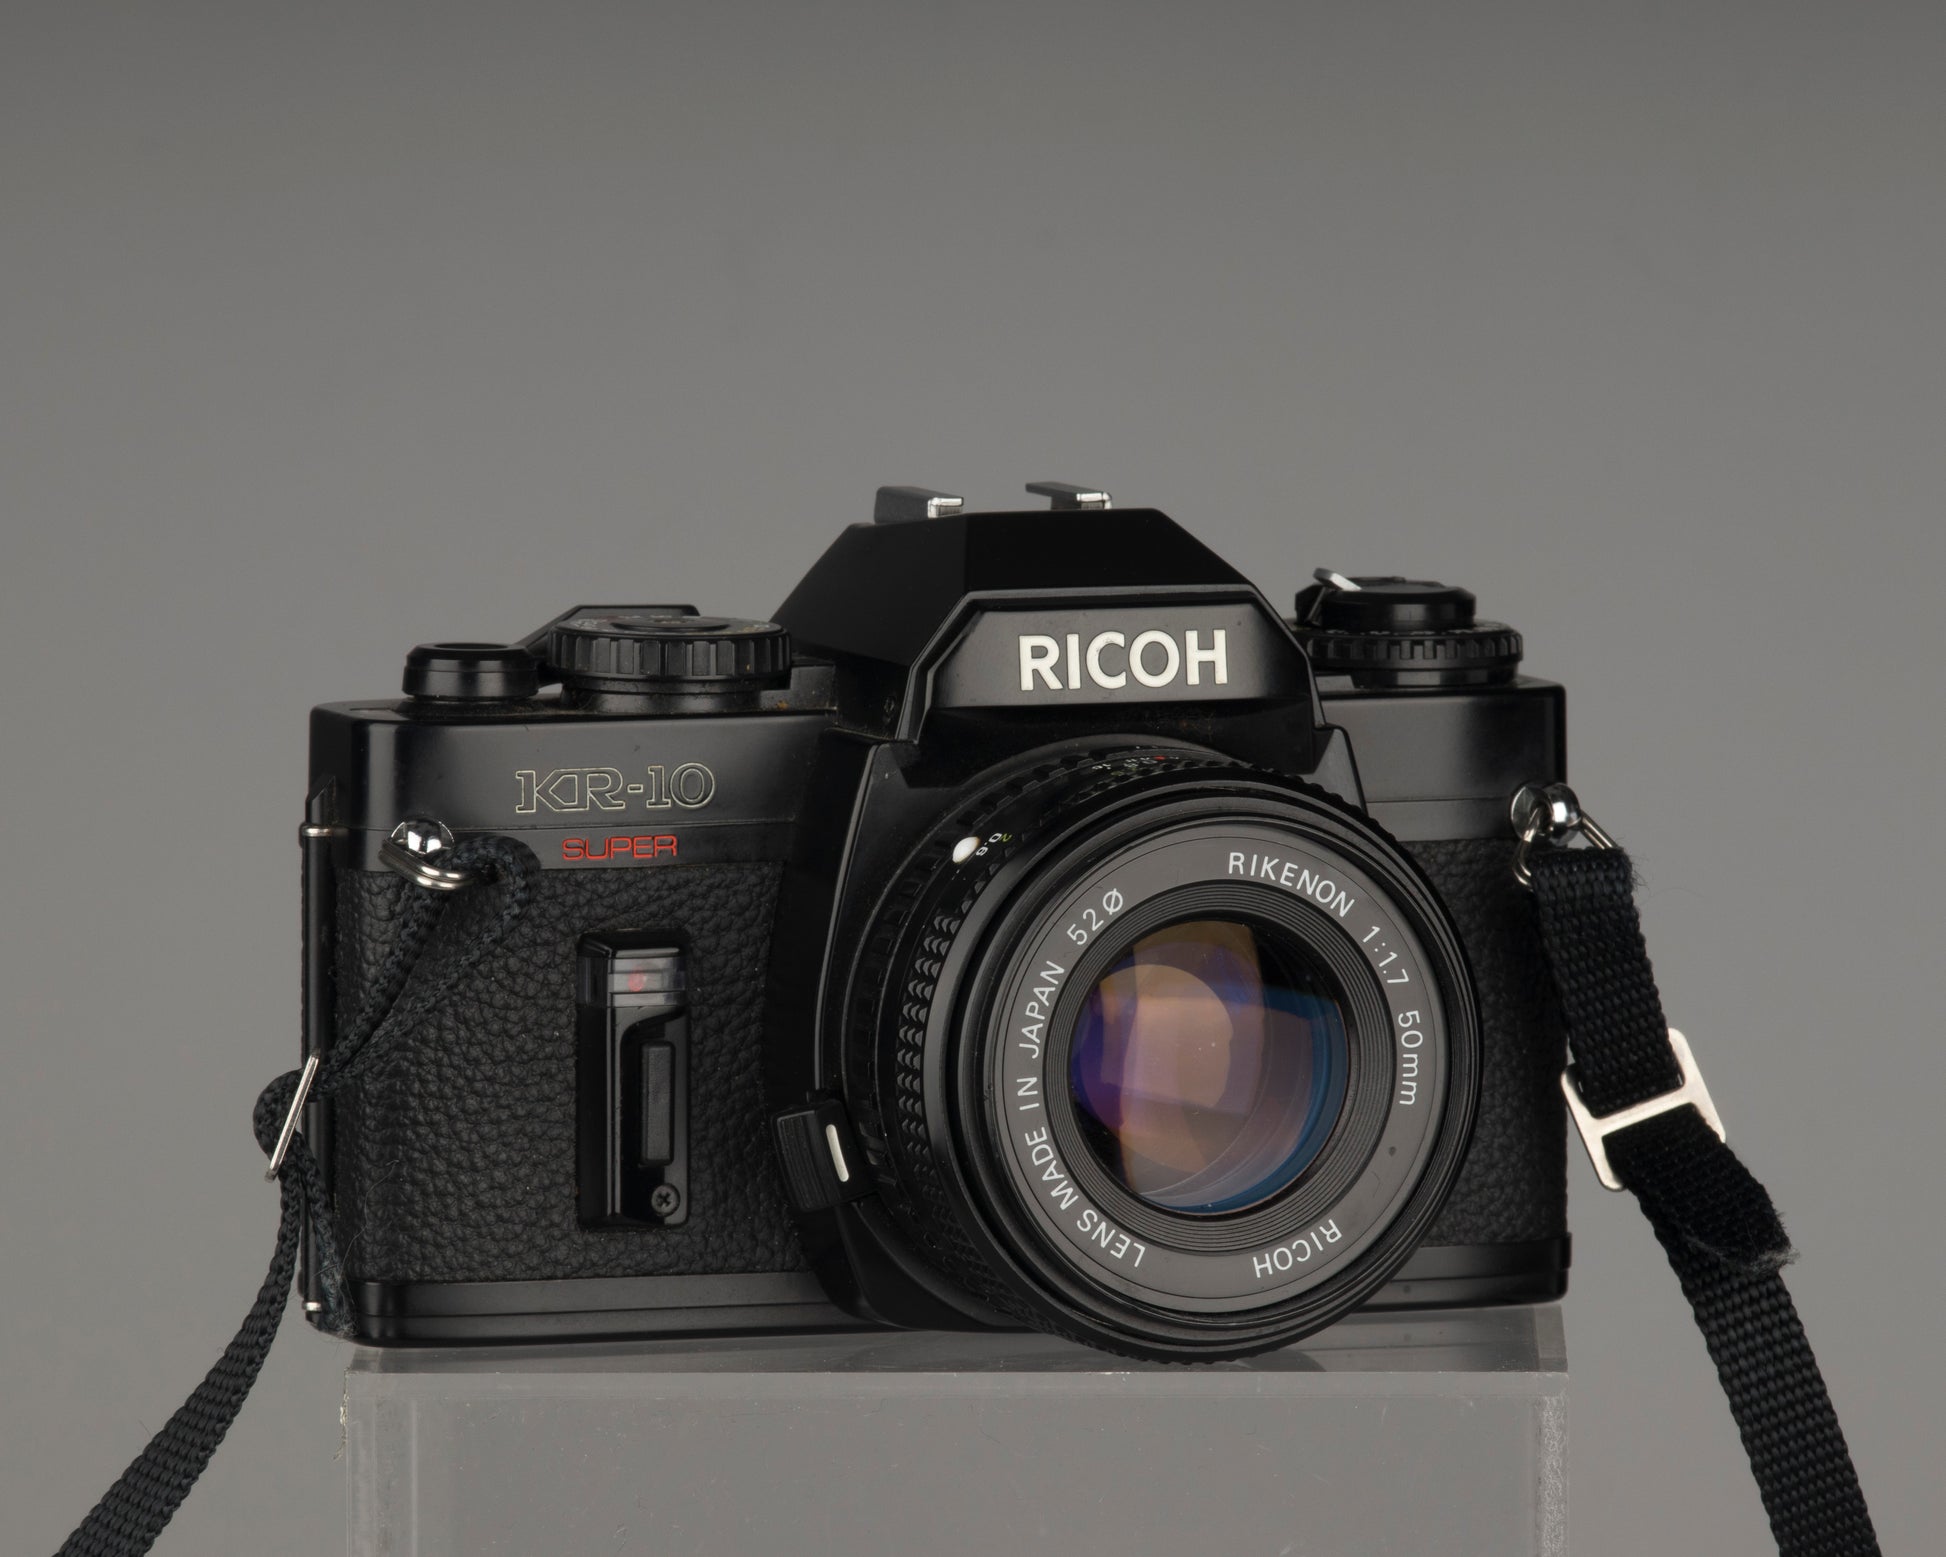 The Ricoh KR-10 Super 35mm film SLR camera with Rikenon 50mm f1.7 lens